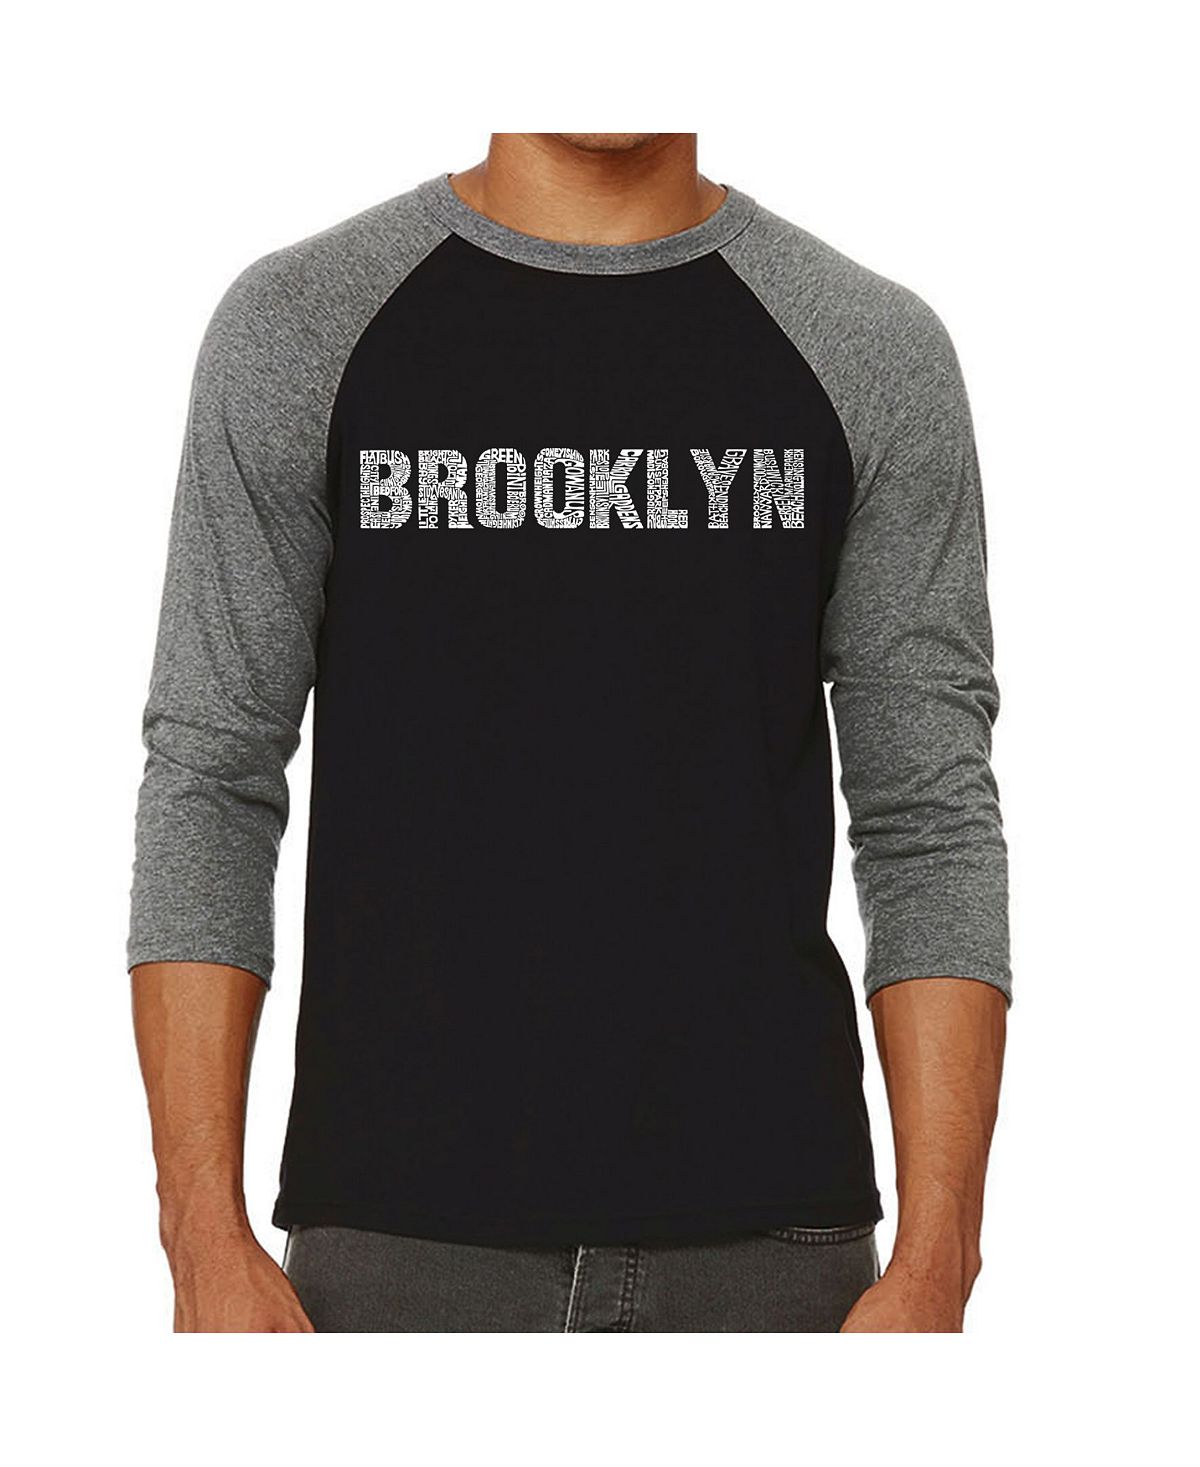 Мужская футболка реглан с надписью brooklyn neighborhoods LA Pop Art, серый мужская футболка реглан с надписью bronx neighborhoods la pop art серый